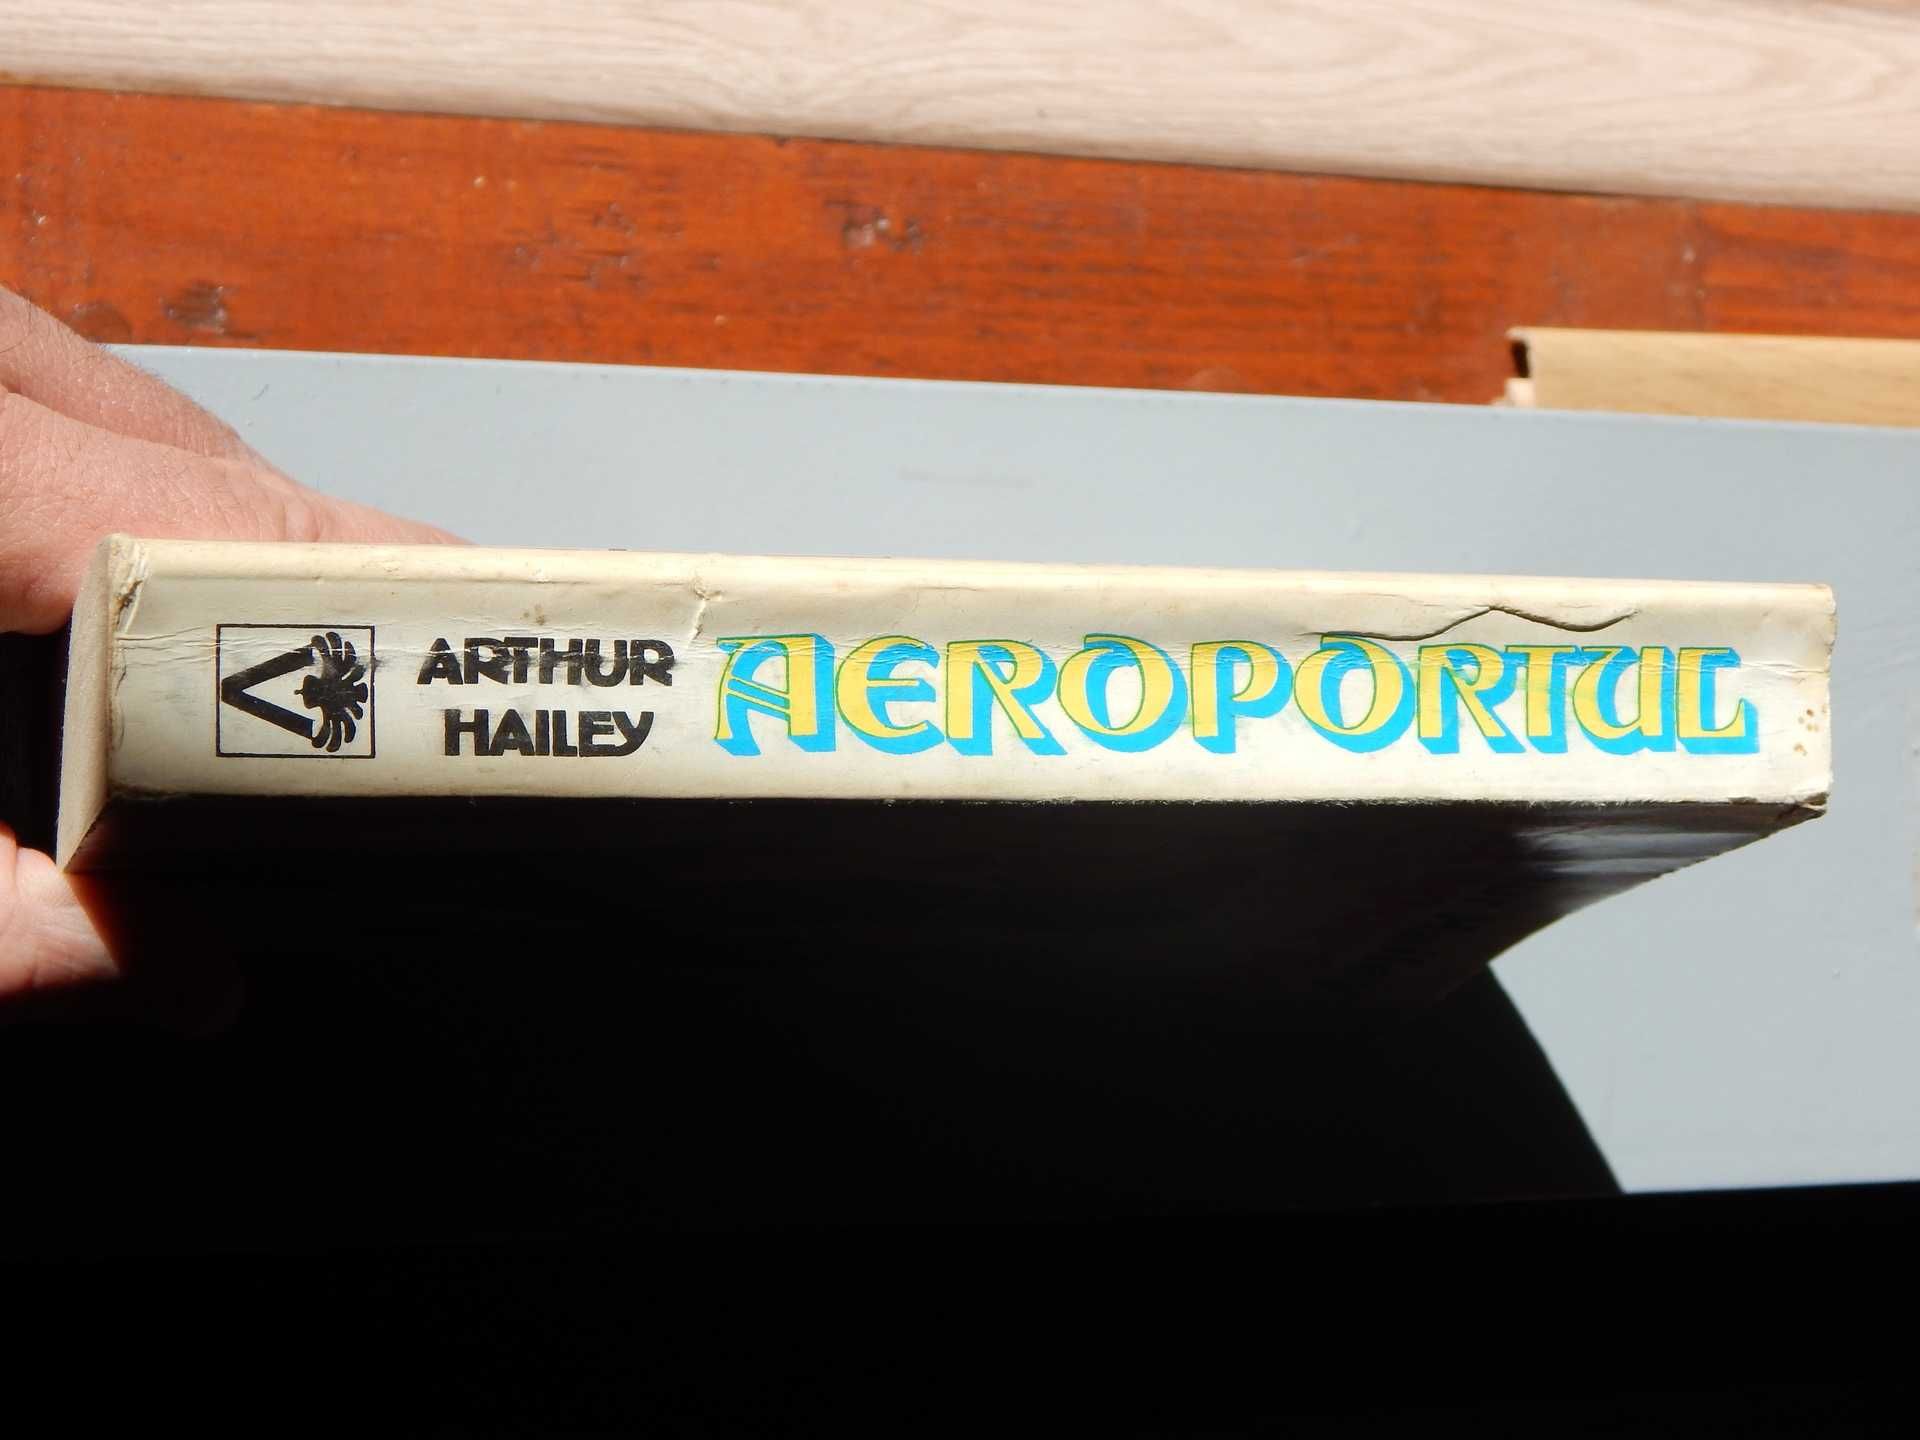 Aeroportul Arthur Hailey roman bestseller american ed Victoria 1992